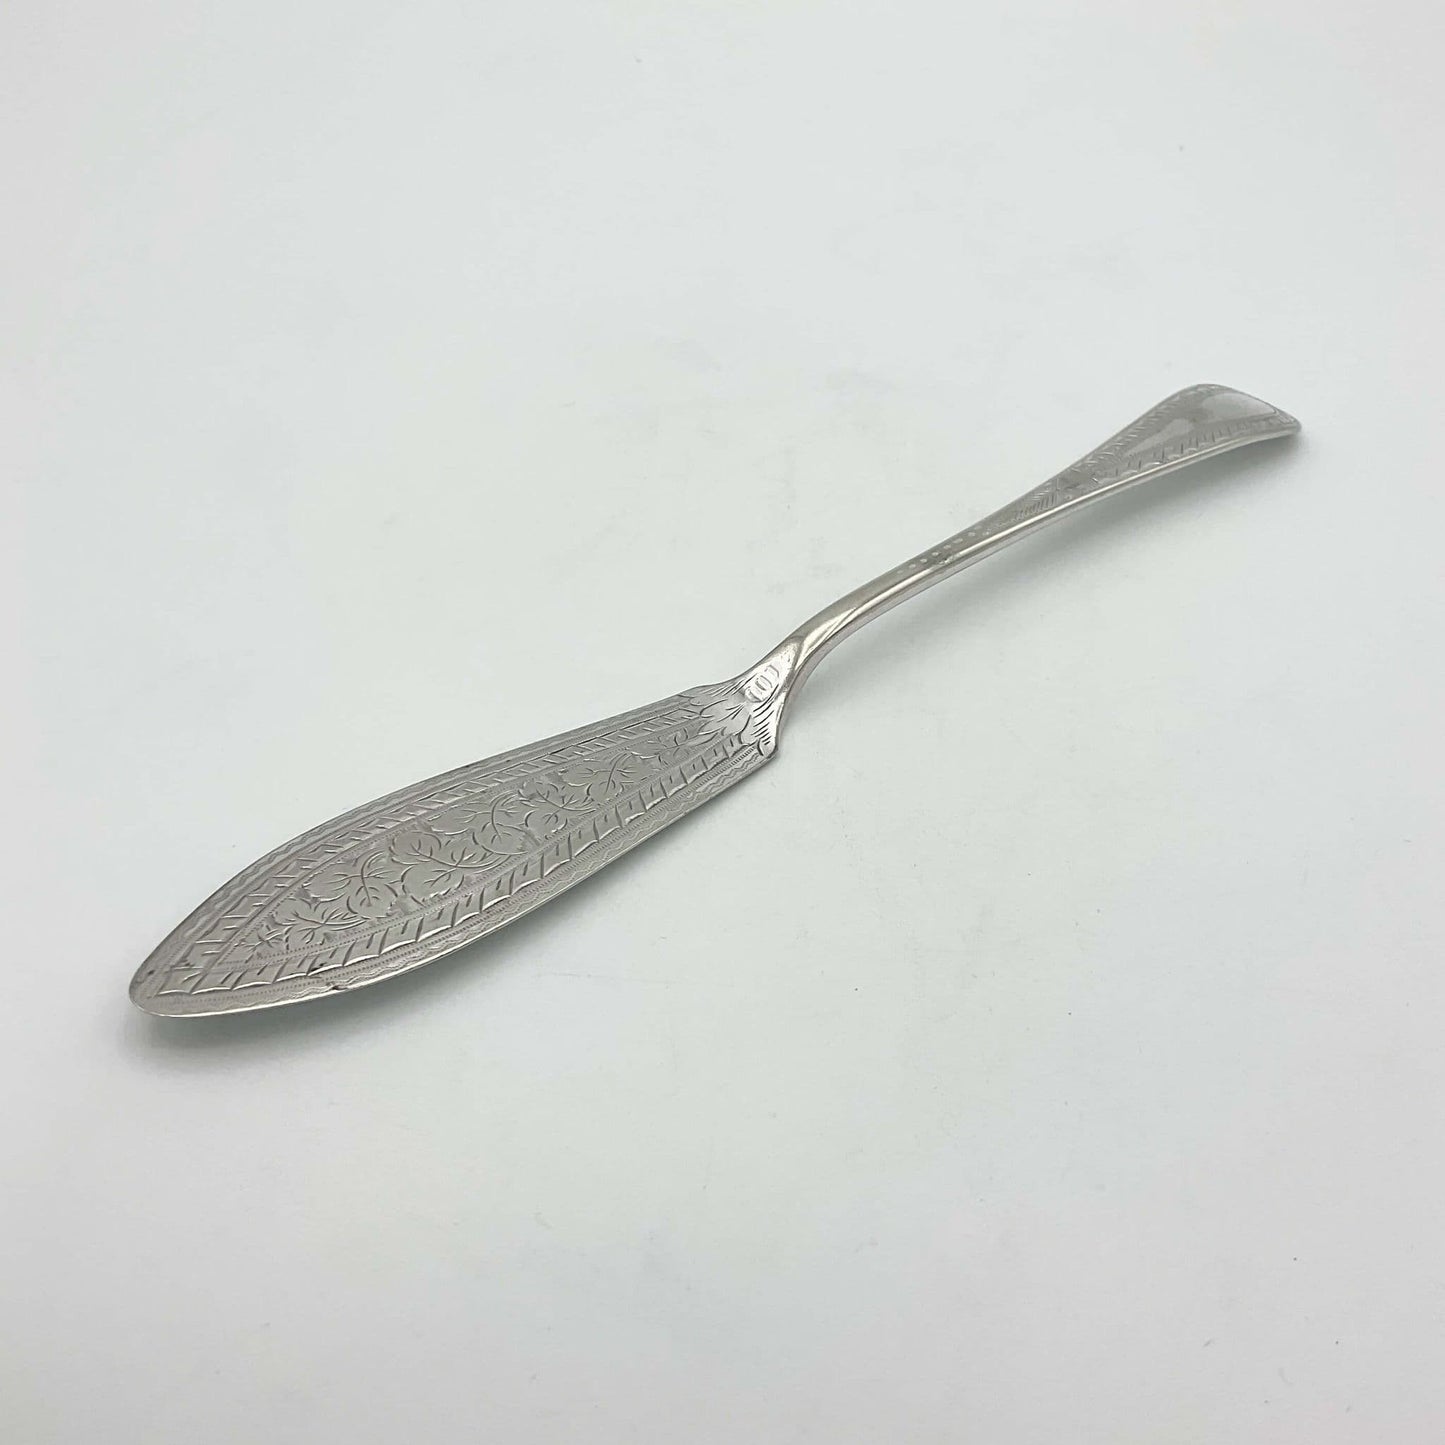 Antique Silver Plated Butter Knife, Butter Spreader